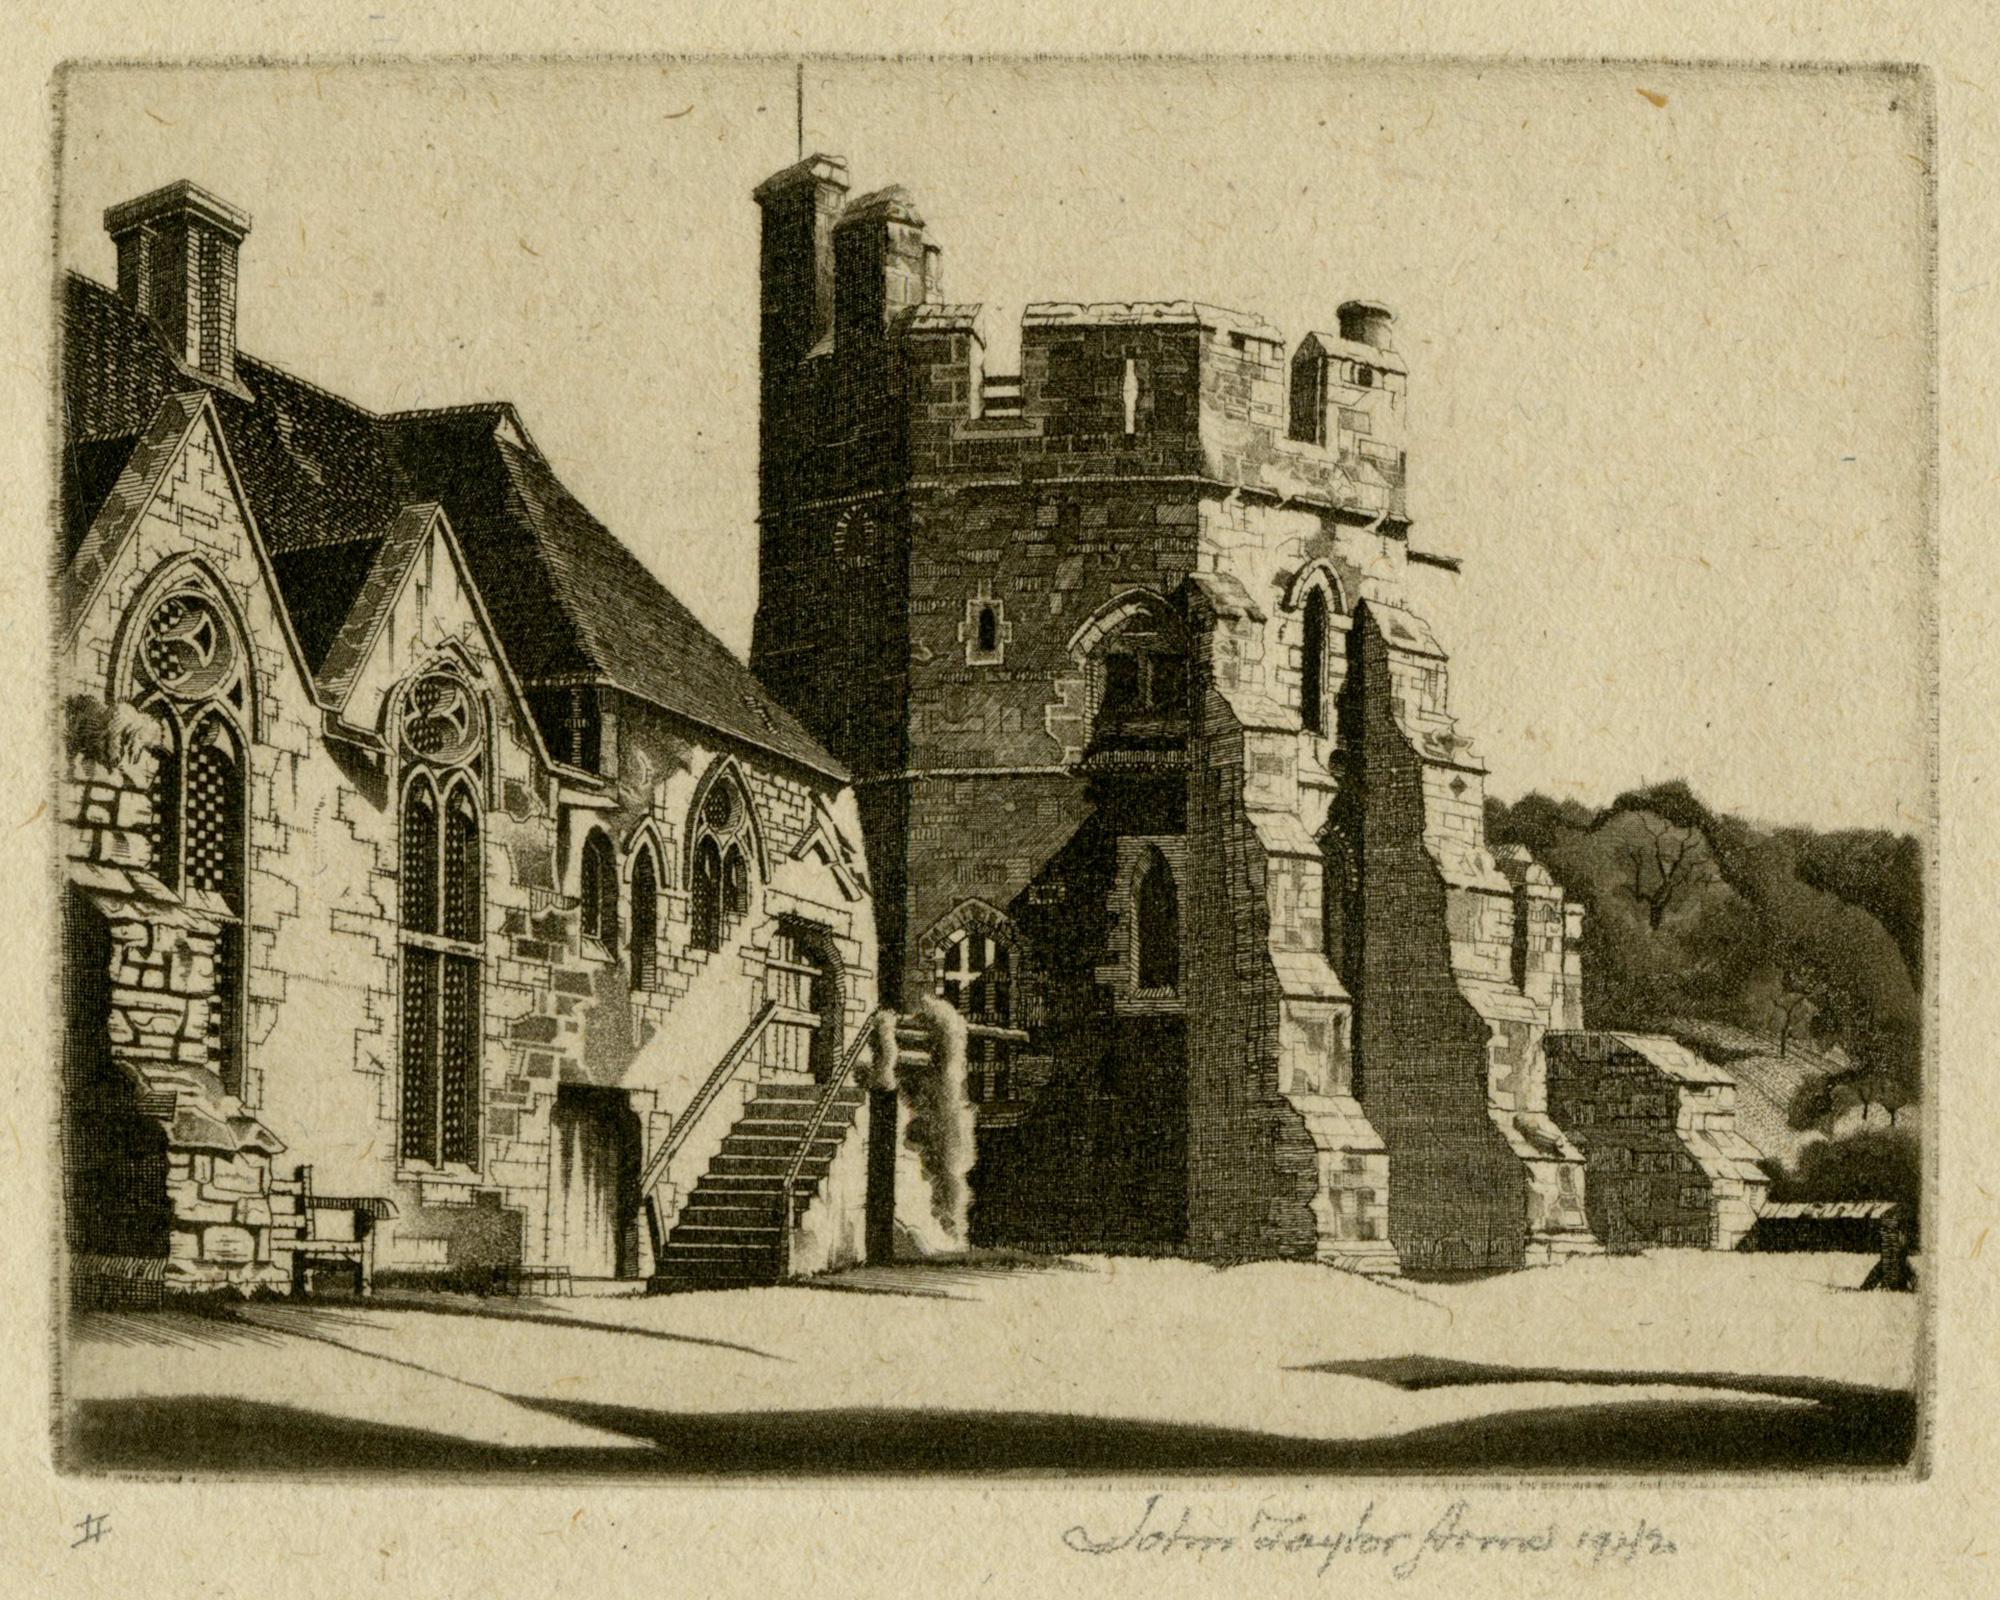 John Taylor Arms Figurative Print - Stokesay Castle